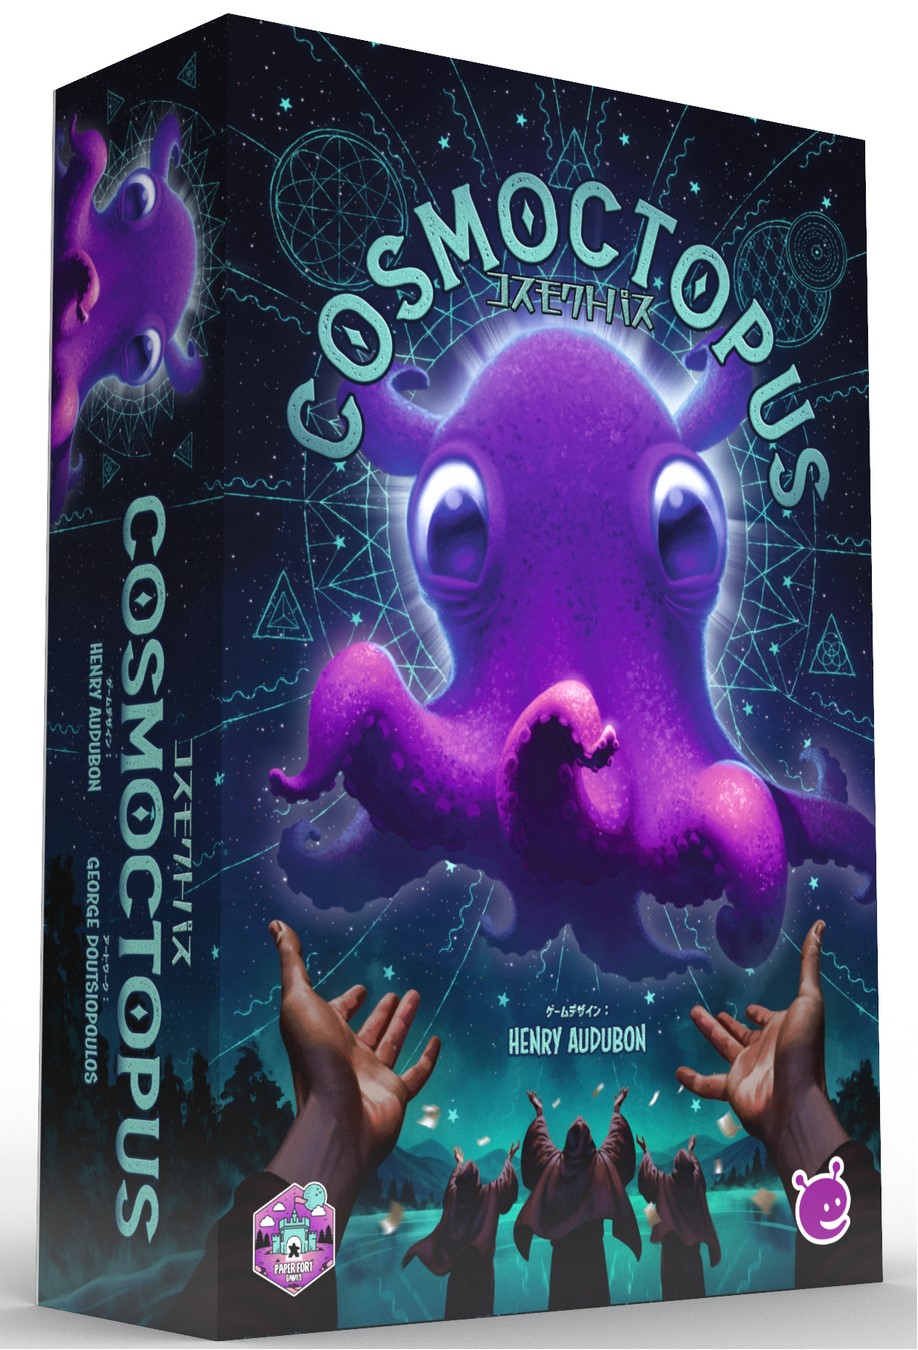 Cosmoctopusj